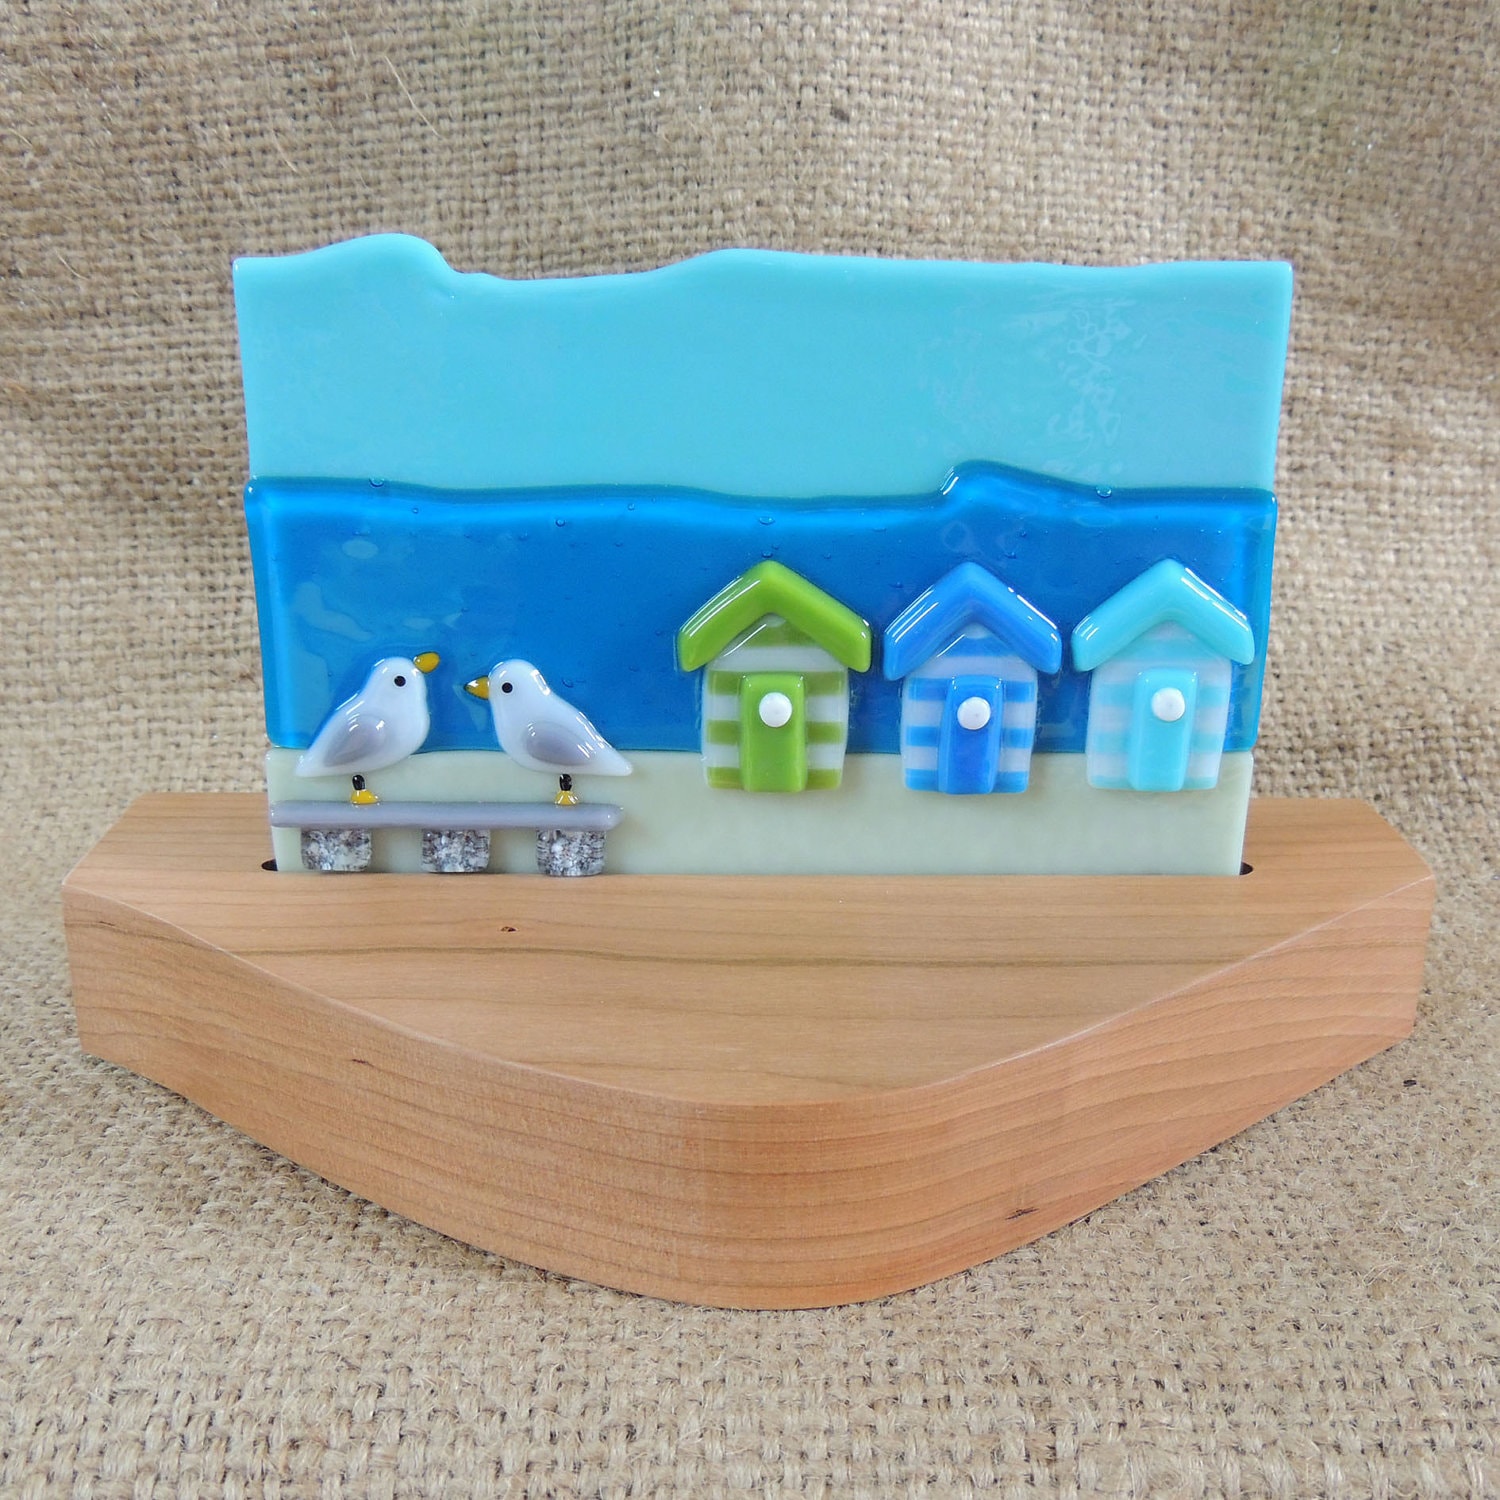 Handmade fused glass wood mounted beach scene by Fusenbeads